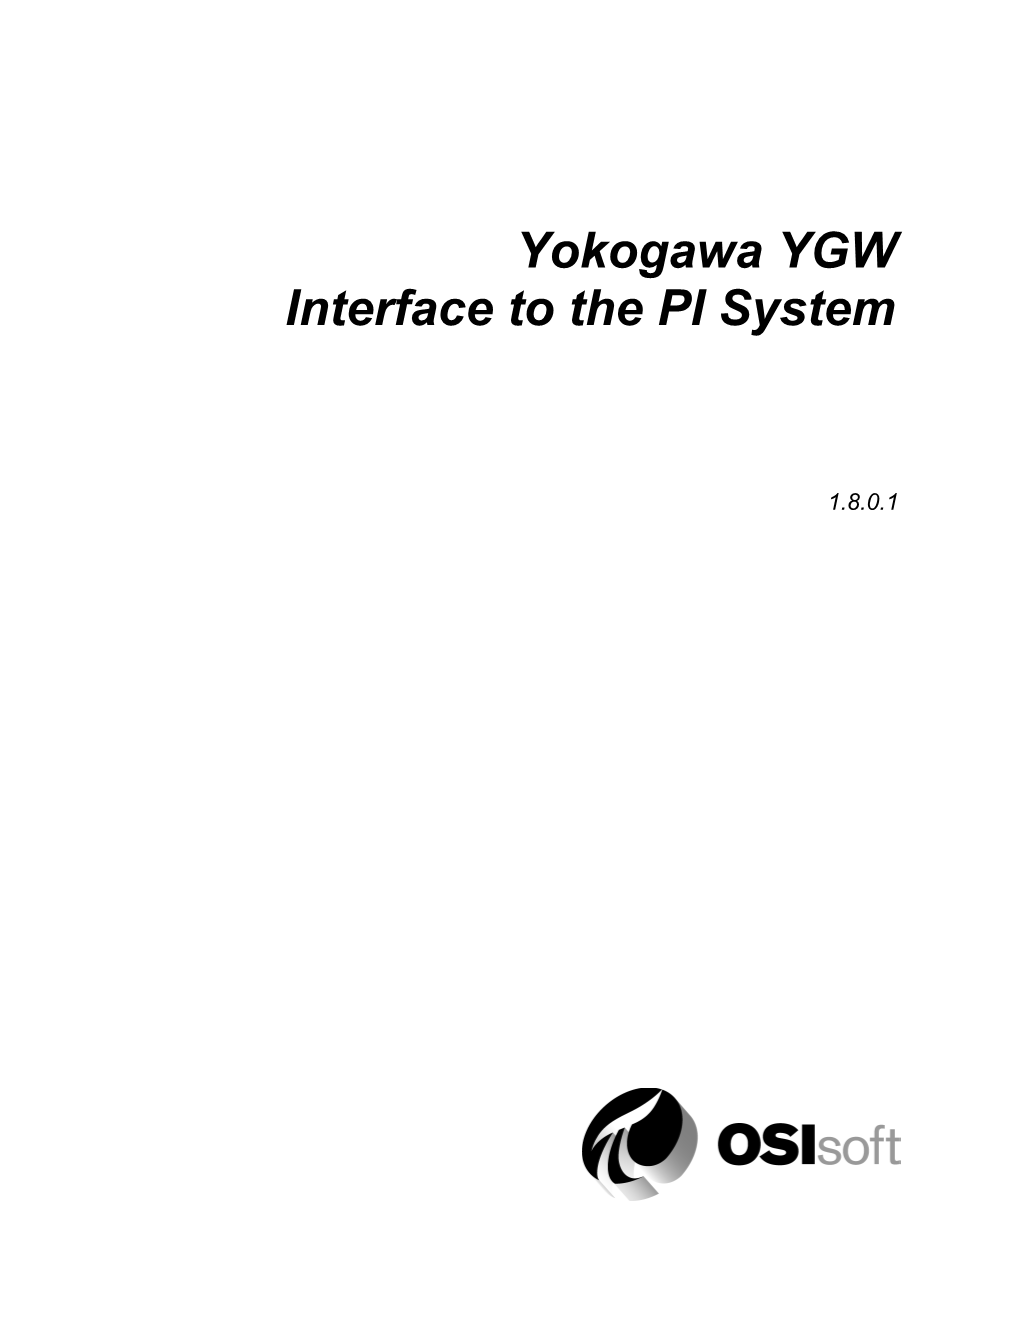 Yokogawa YGW Interface to the PI System